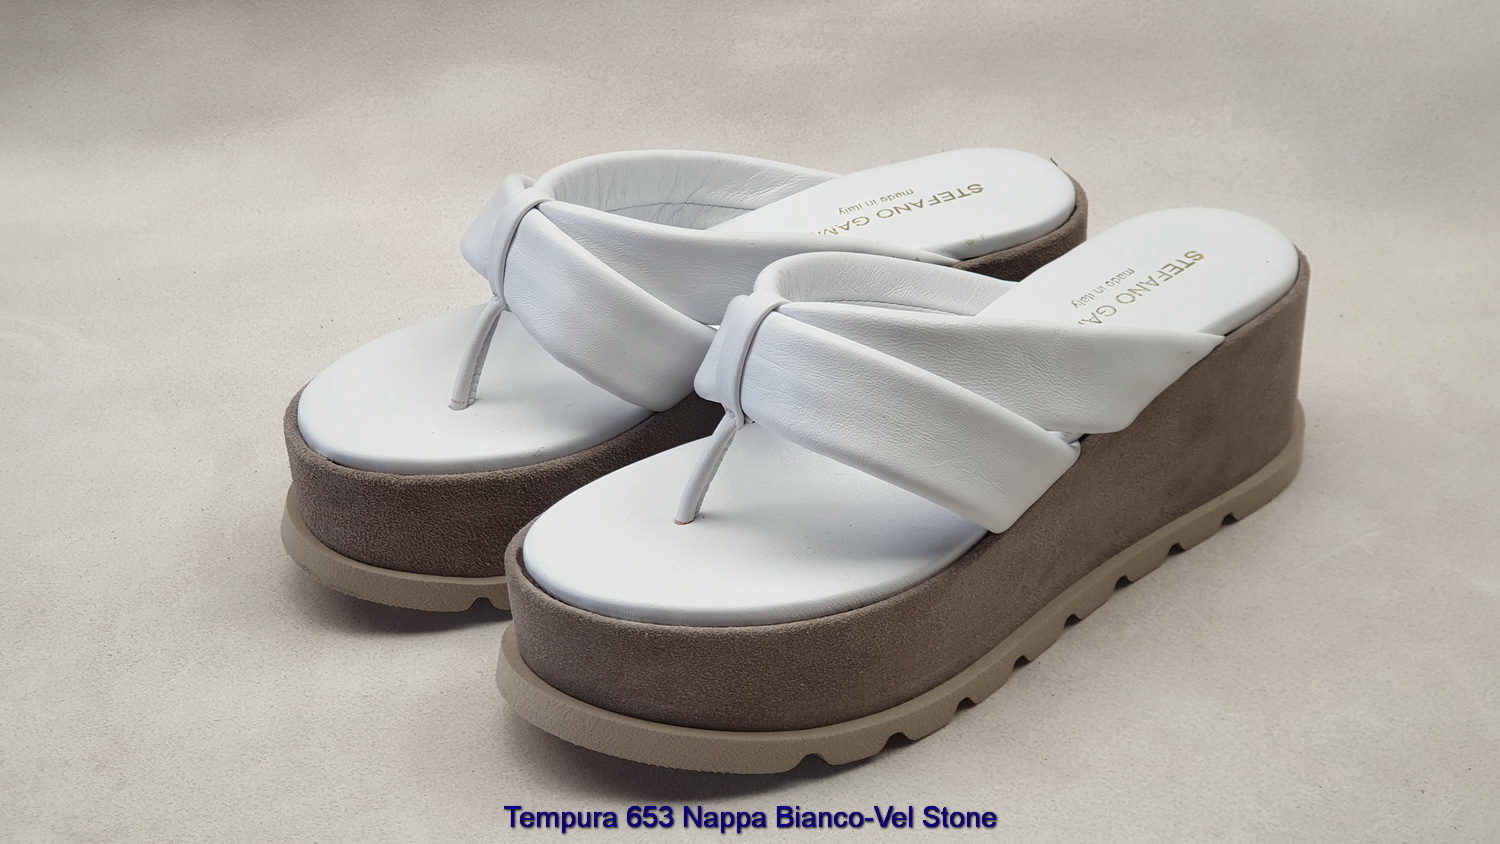 Tempura-653-Nappa-Bianco-Vel-Stone